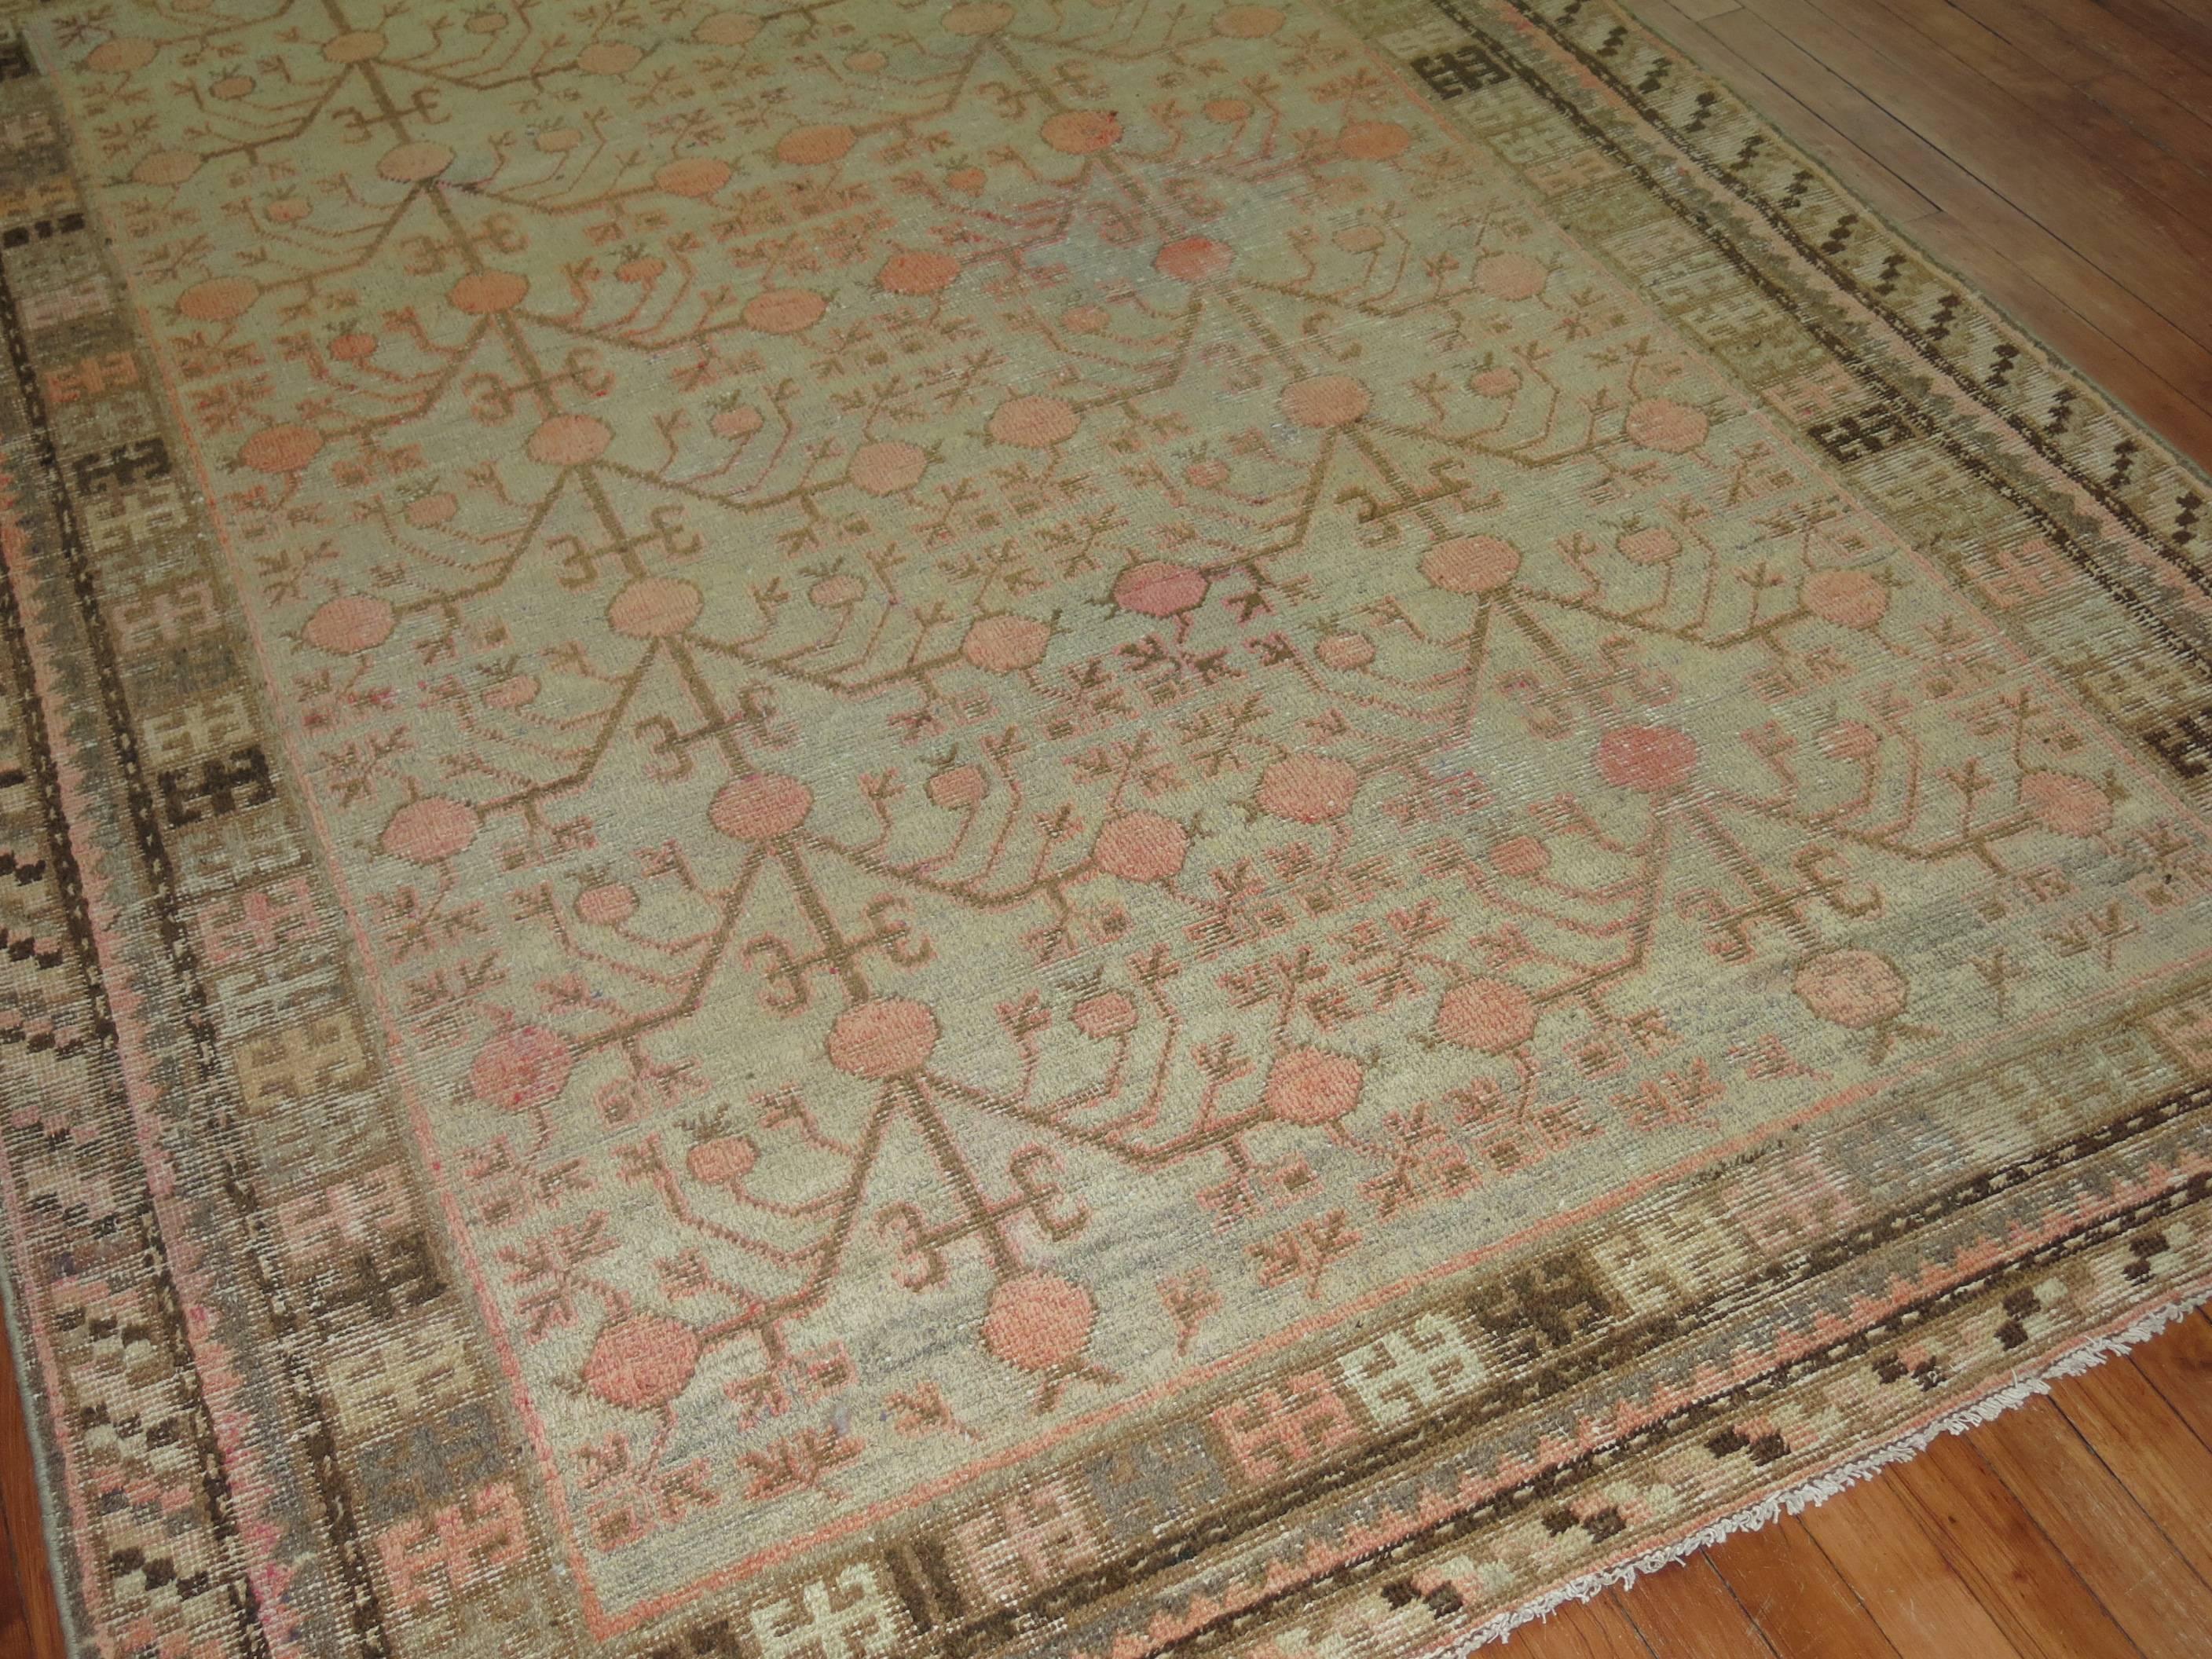 An intermediate size antique Khotan rug.

Measures: 5'8